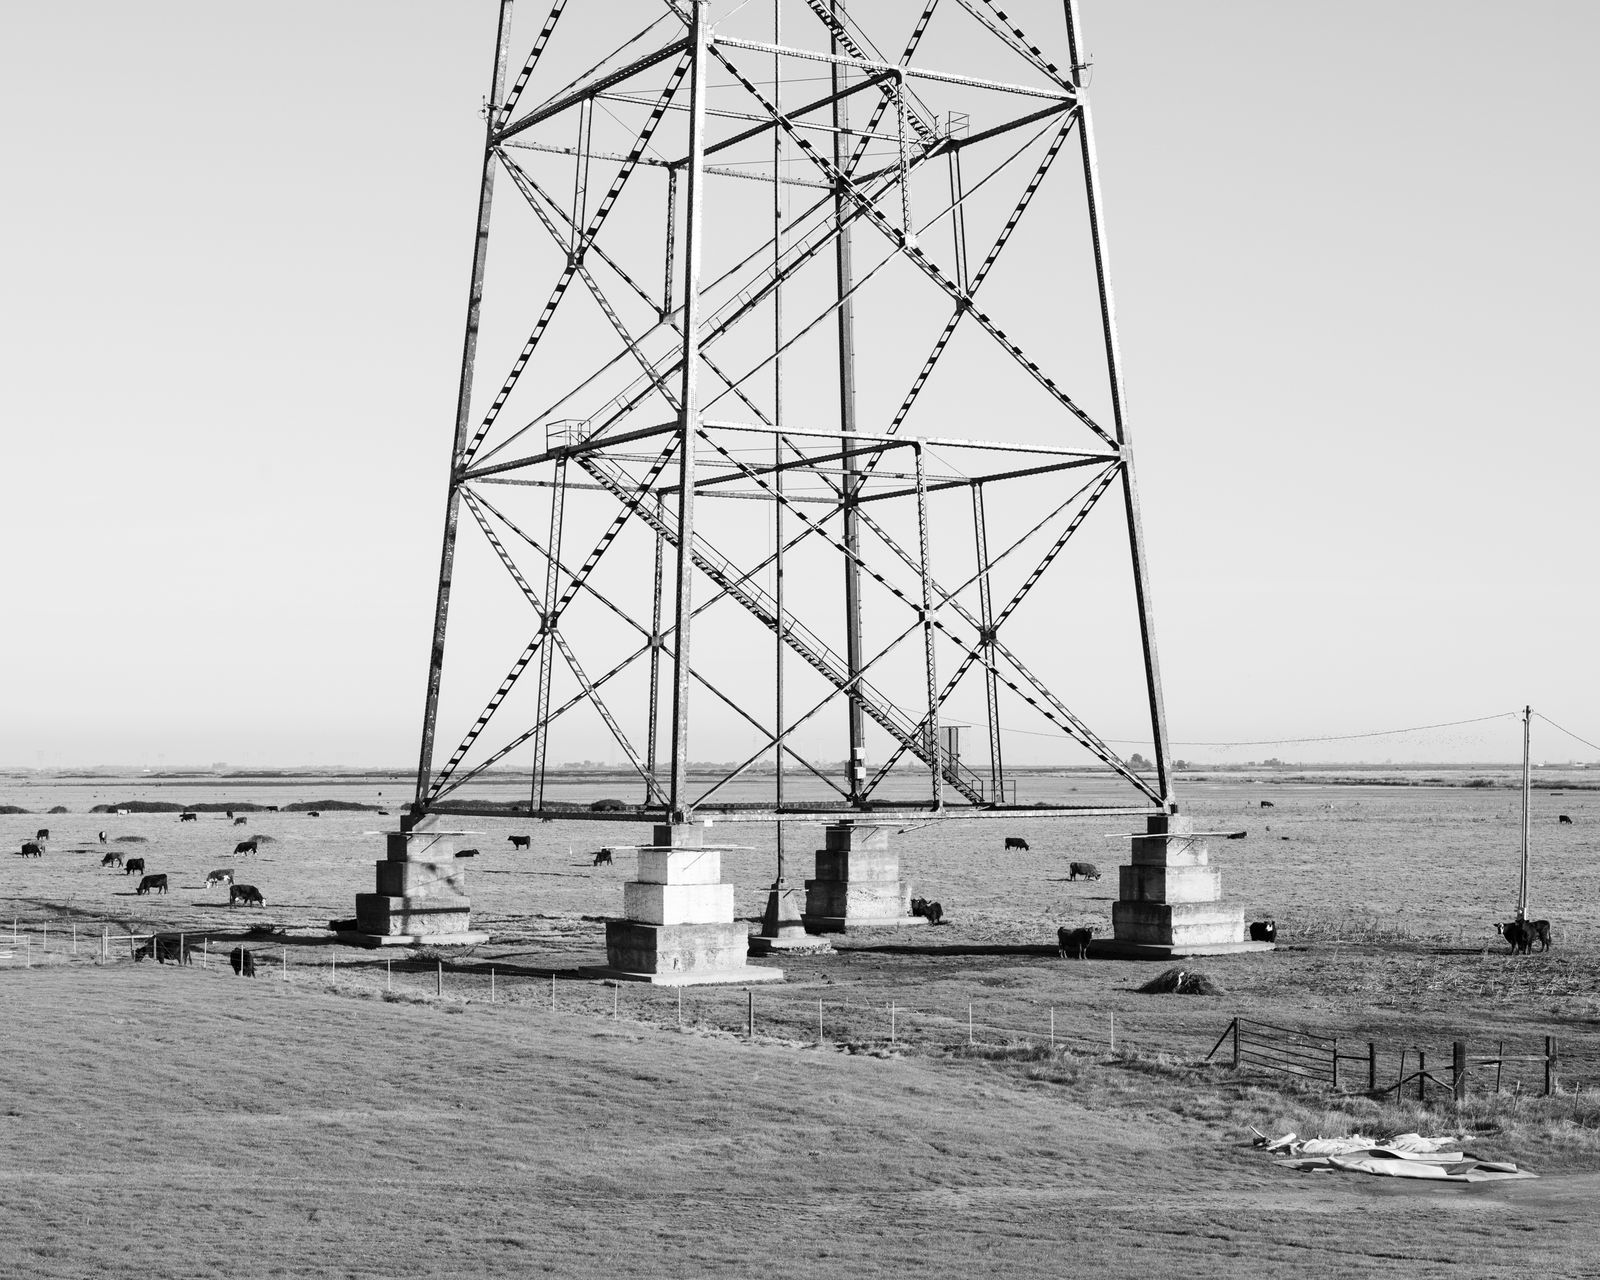 © Max Gavrich - Transmission Tower (Grazing Land), 2020